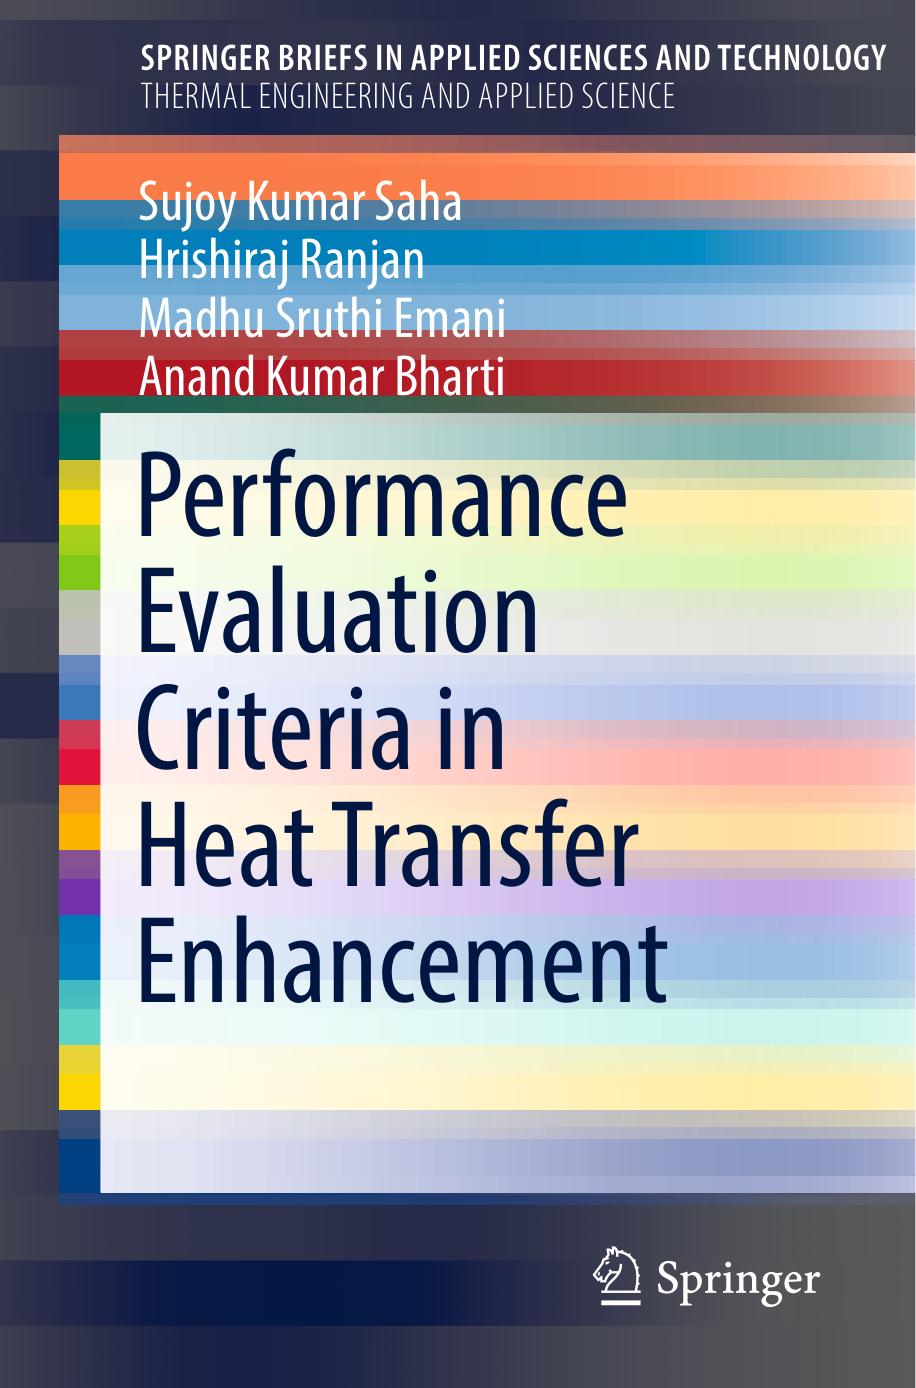 Performance Evaluation Criteria in Heat Transfer Enhancement-Sprin, 2020